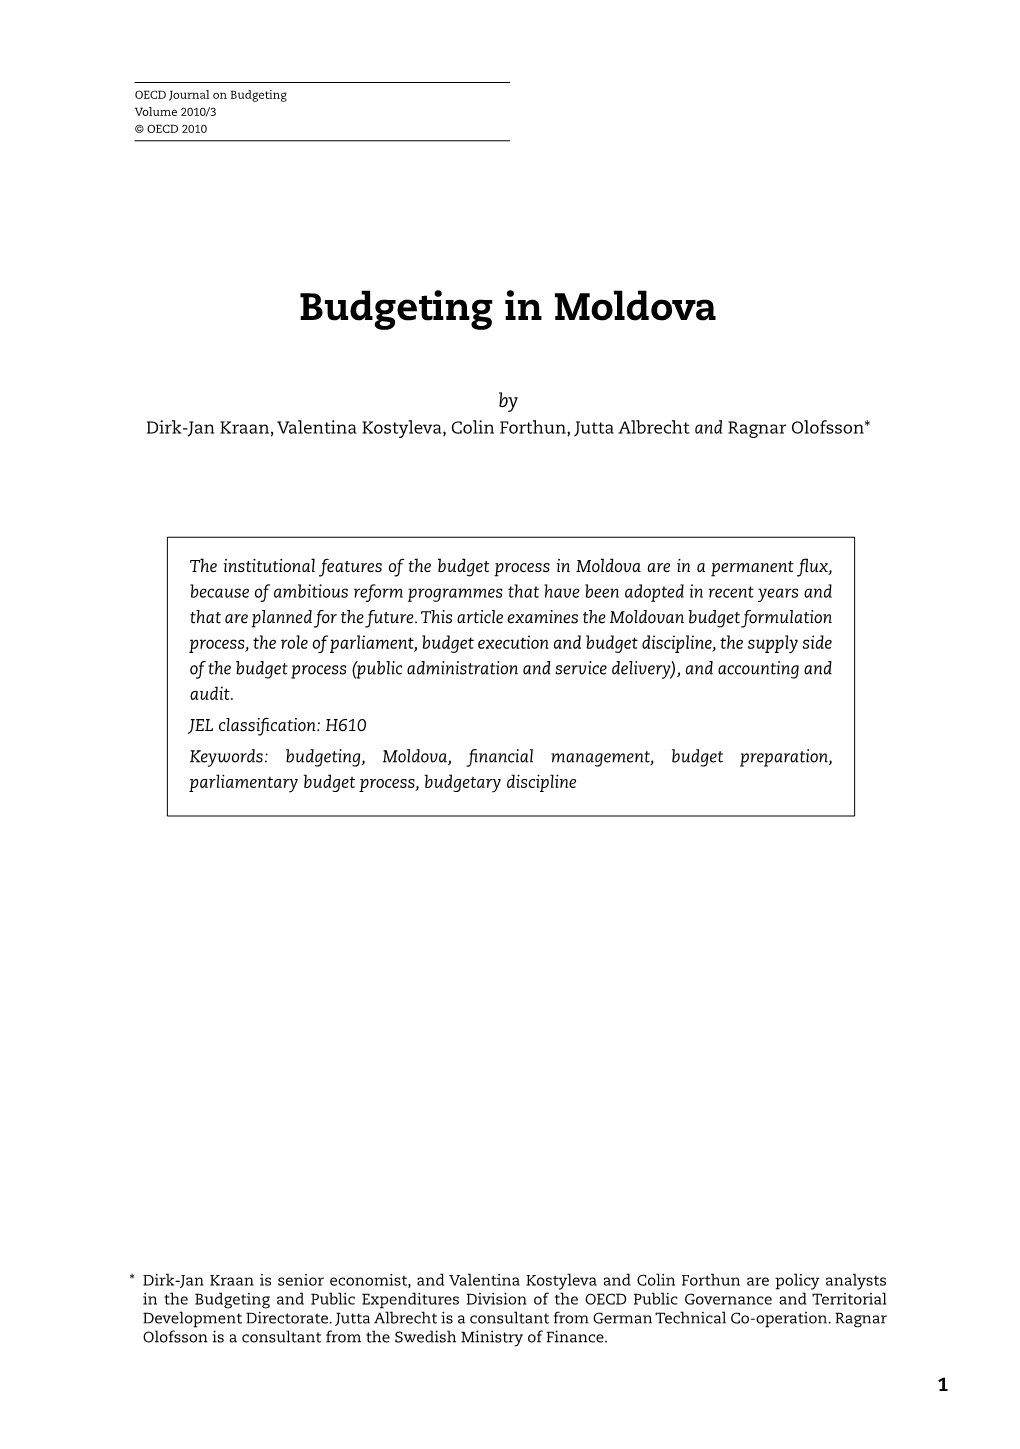 Budgeting in Moldova